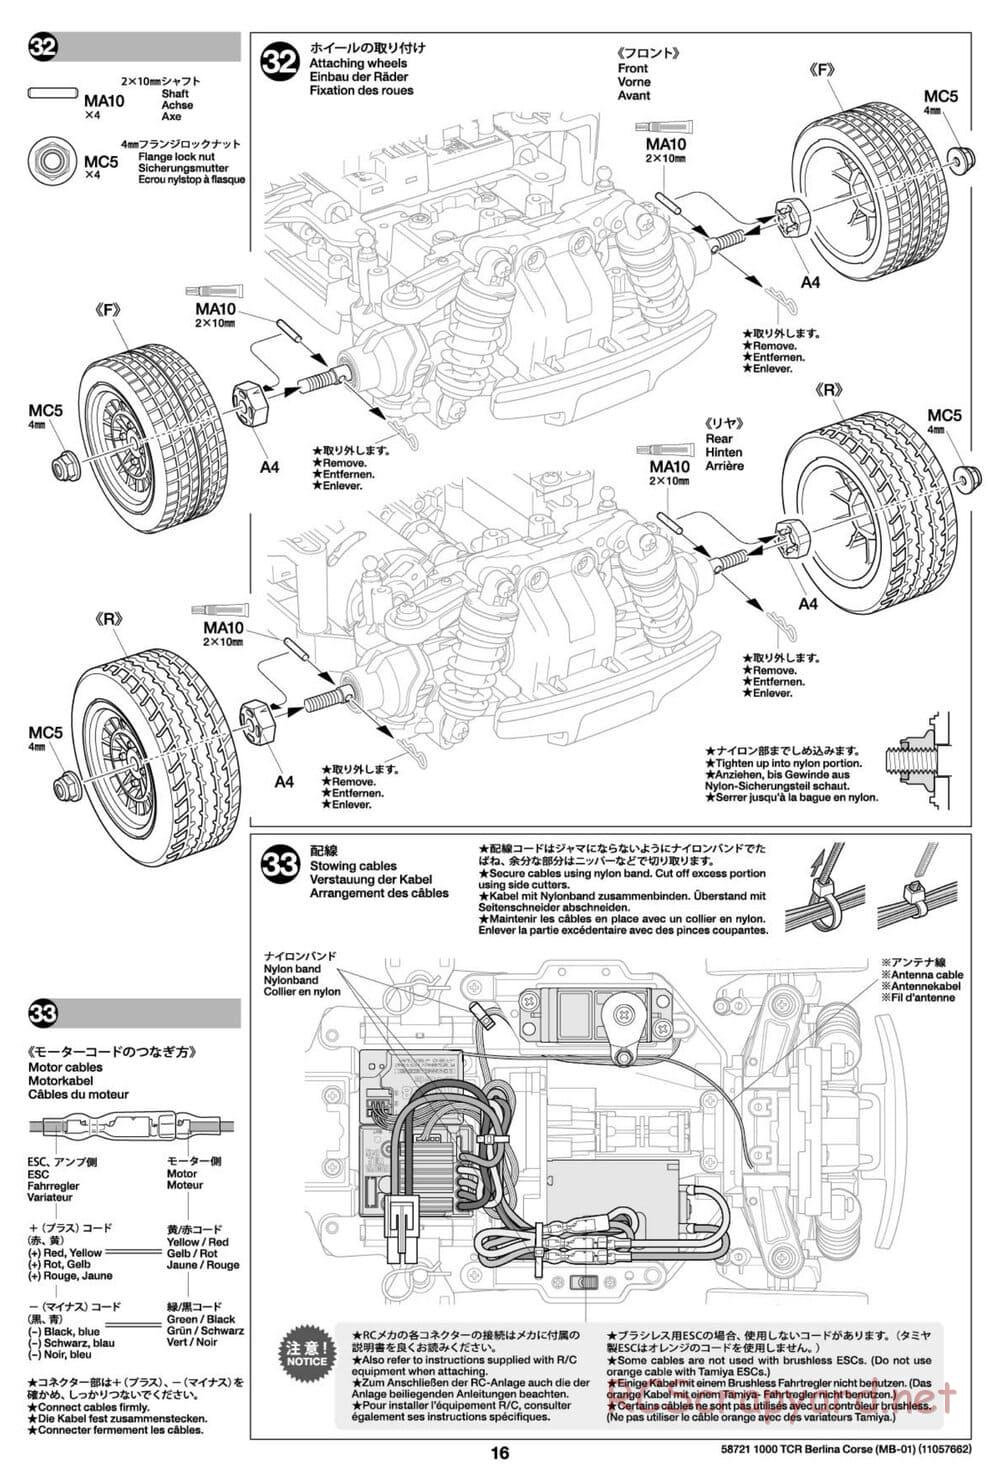 Tamiya - Fiat Abarth 1000 TCR Berlina Corsa - MB-01 Chassis - Manual - Page 16